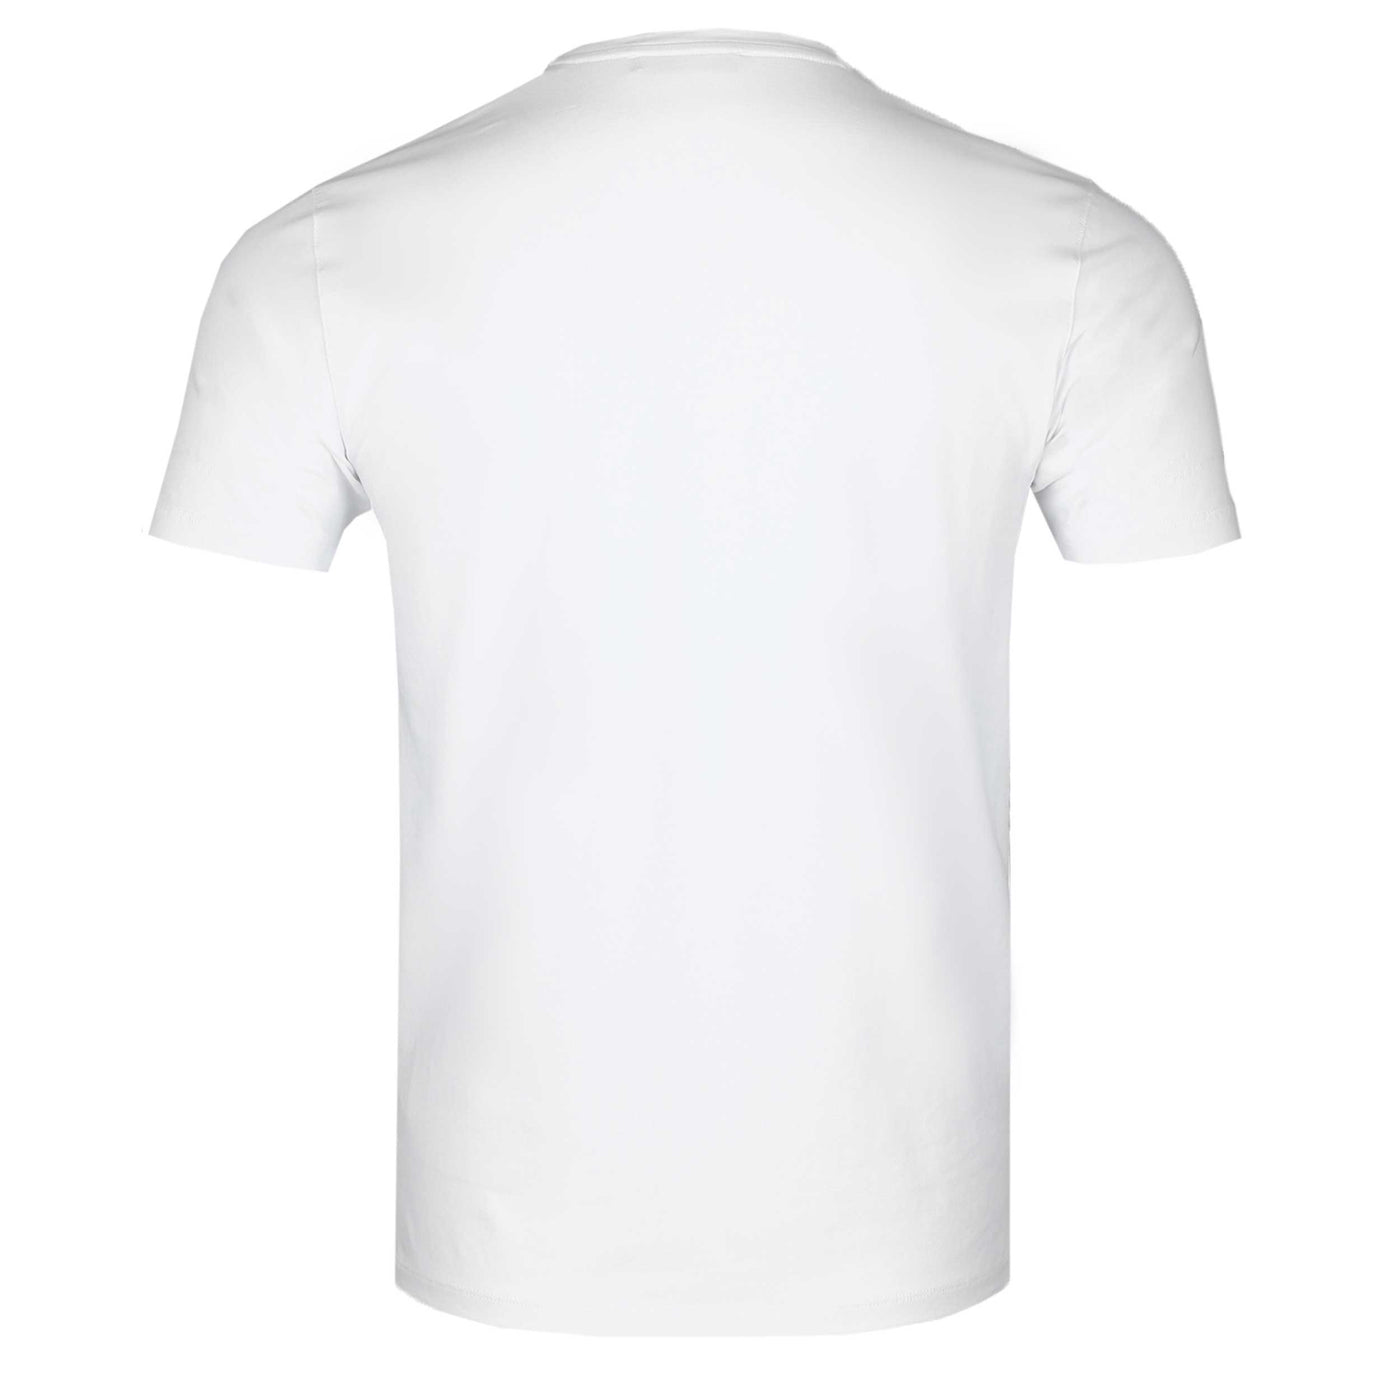 Remus Uomo Basic Crew Neck T Shirt in White Back